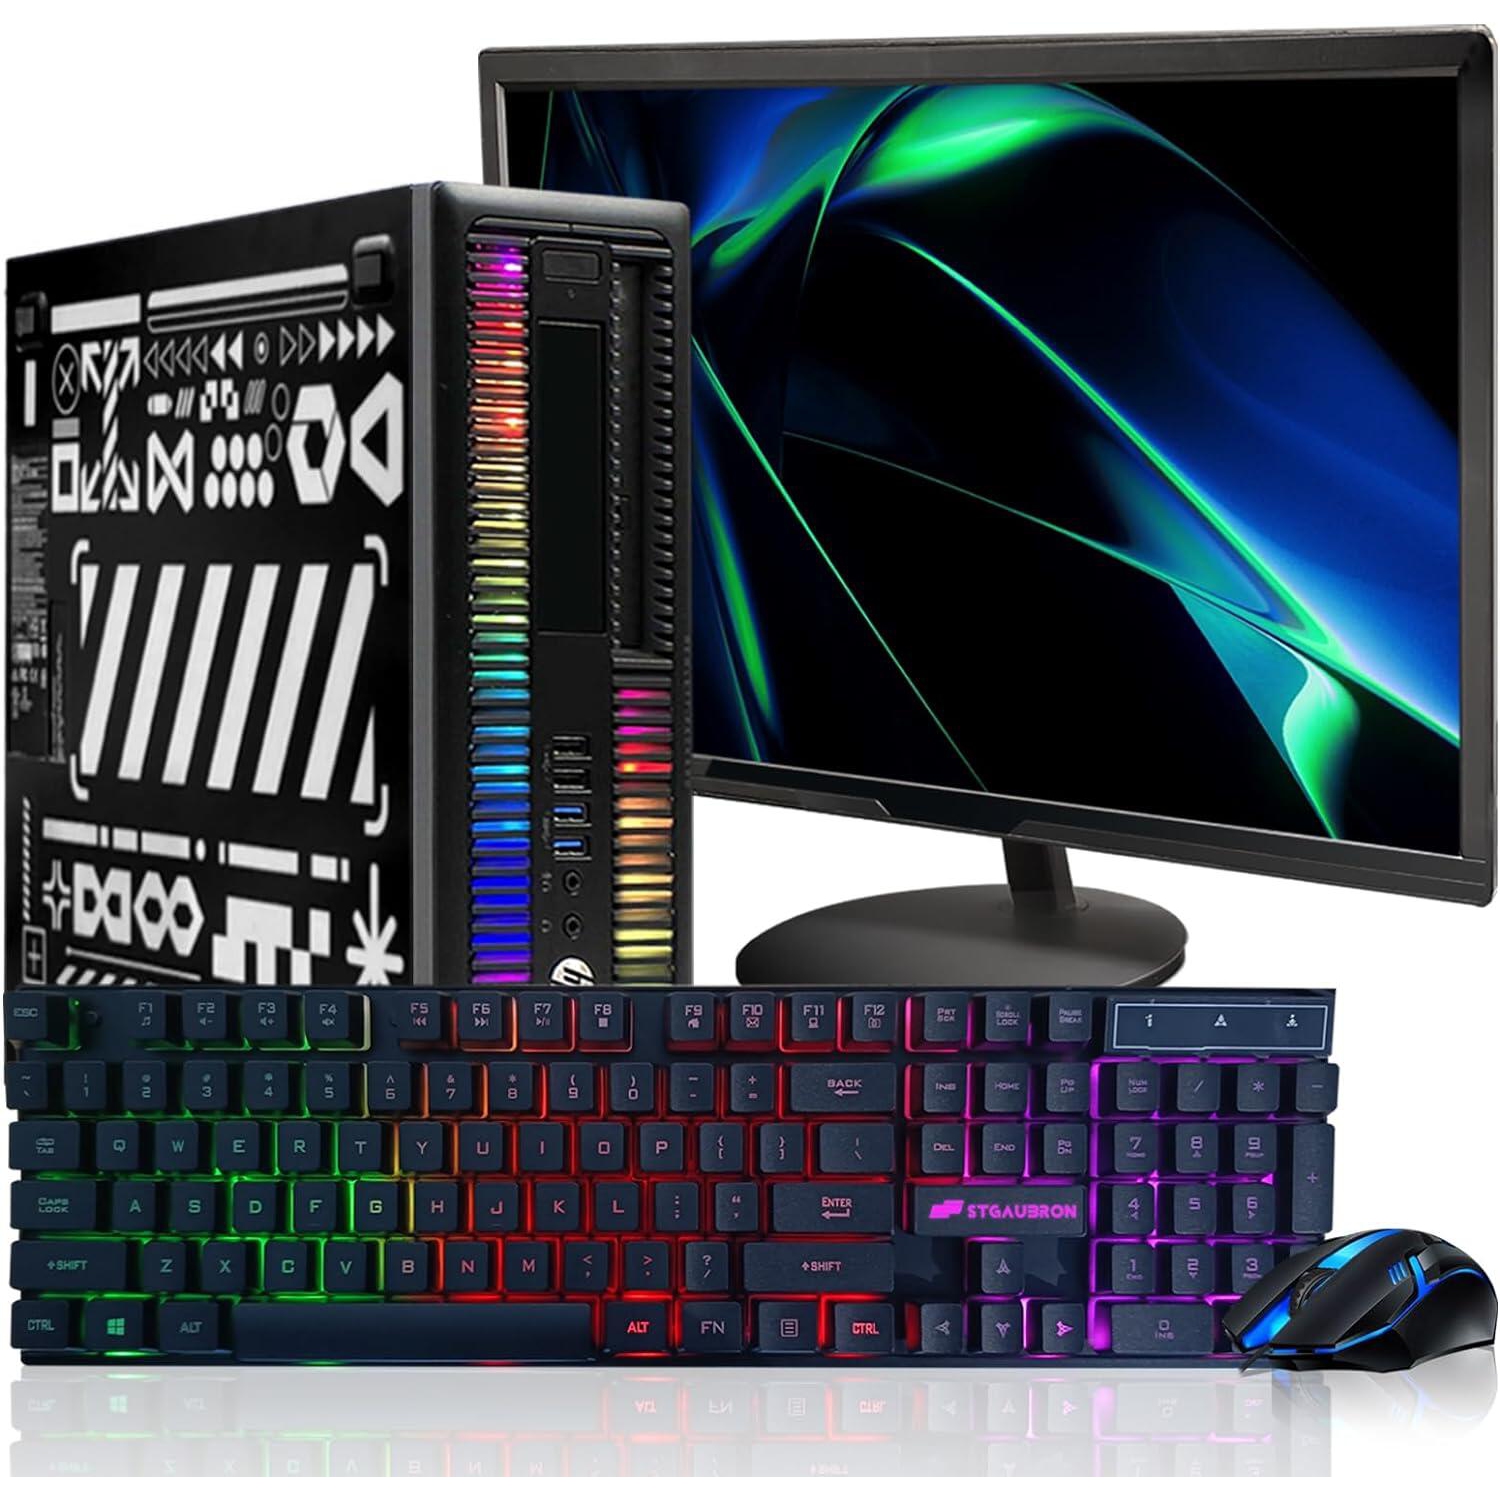 HP RGB Gaming Desktop Computer, Intel Core I7 3.4G up to 3.9GHz, GTX 750 Ti 4G, 32GB, 2T SSD, New 24" 1080 FHD LED, RGB KB&MS, 600M WiFi&BT 5.0, Win 10 Pro -Refurbished Excellent